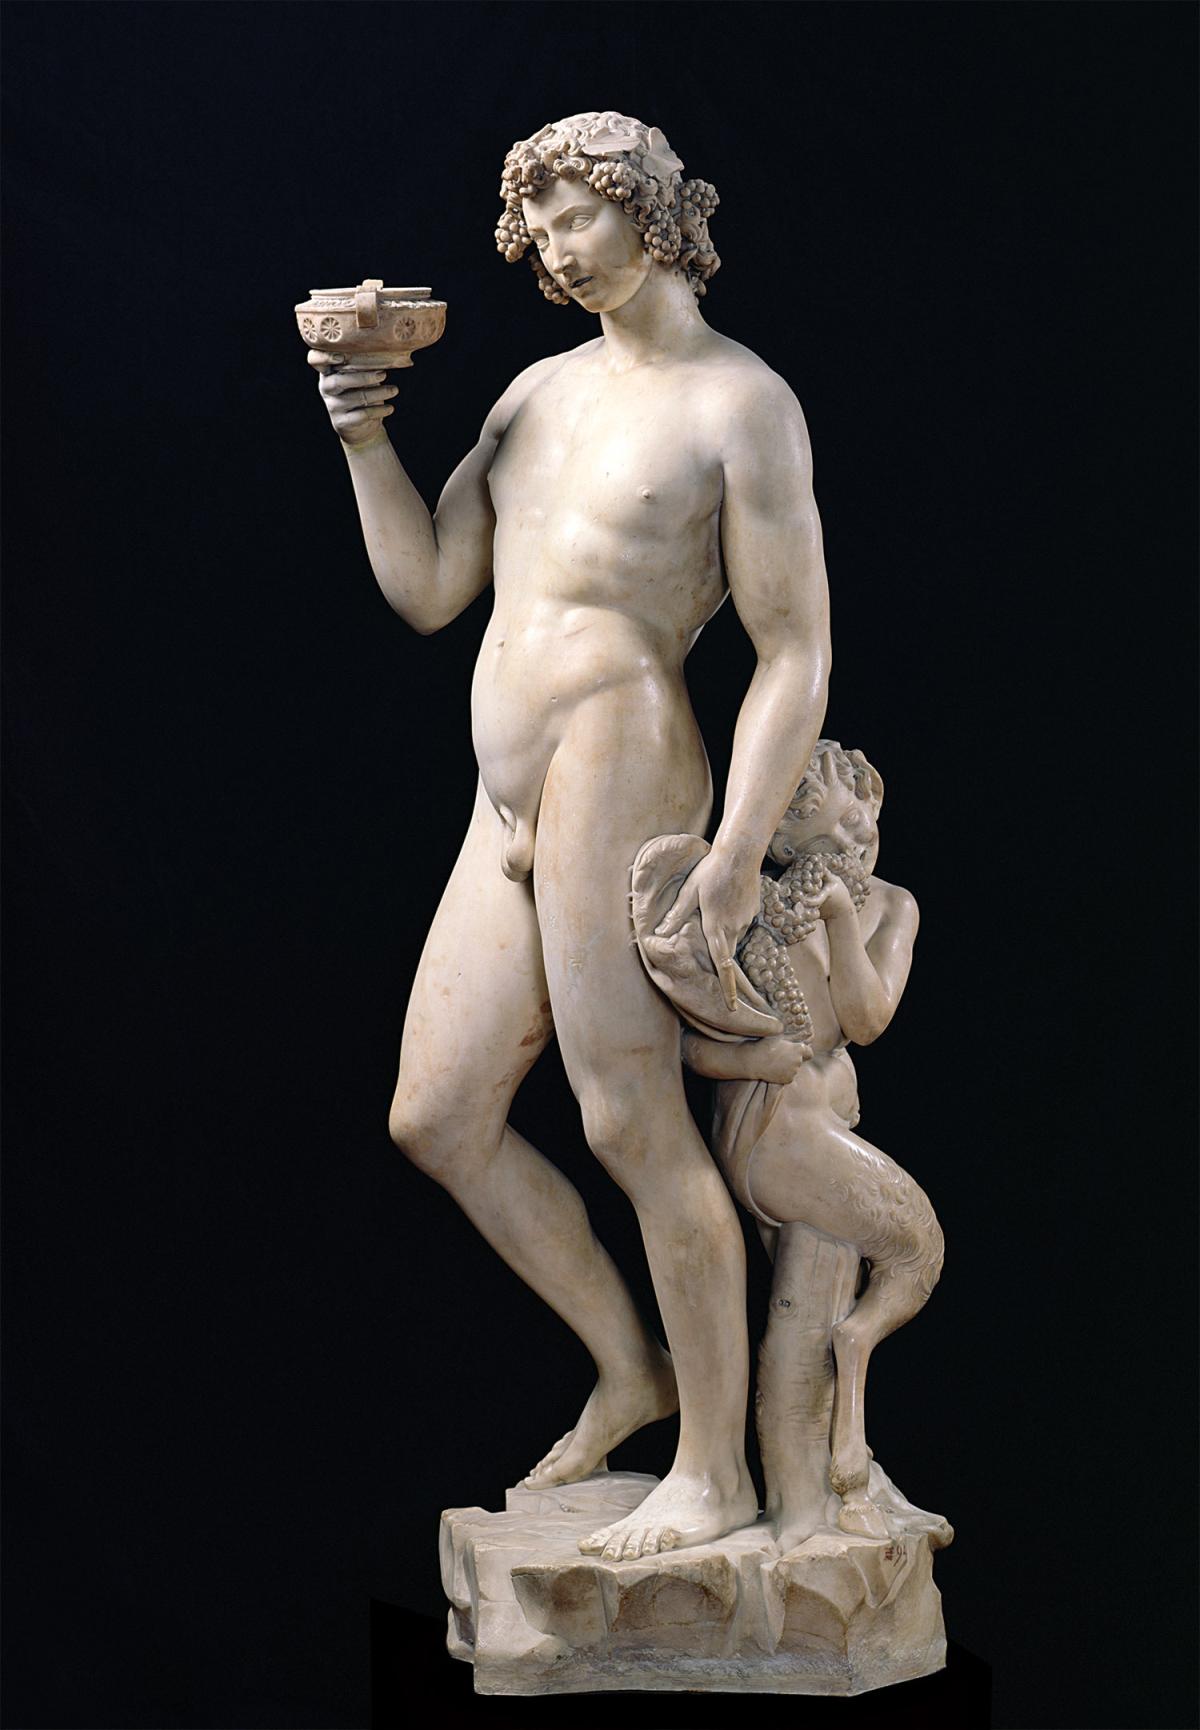 Michelangelo's Bacchus statue